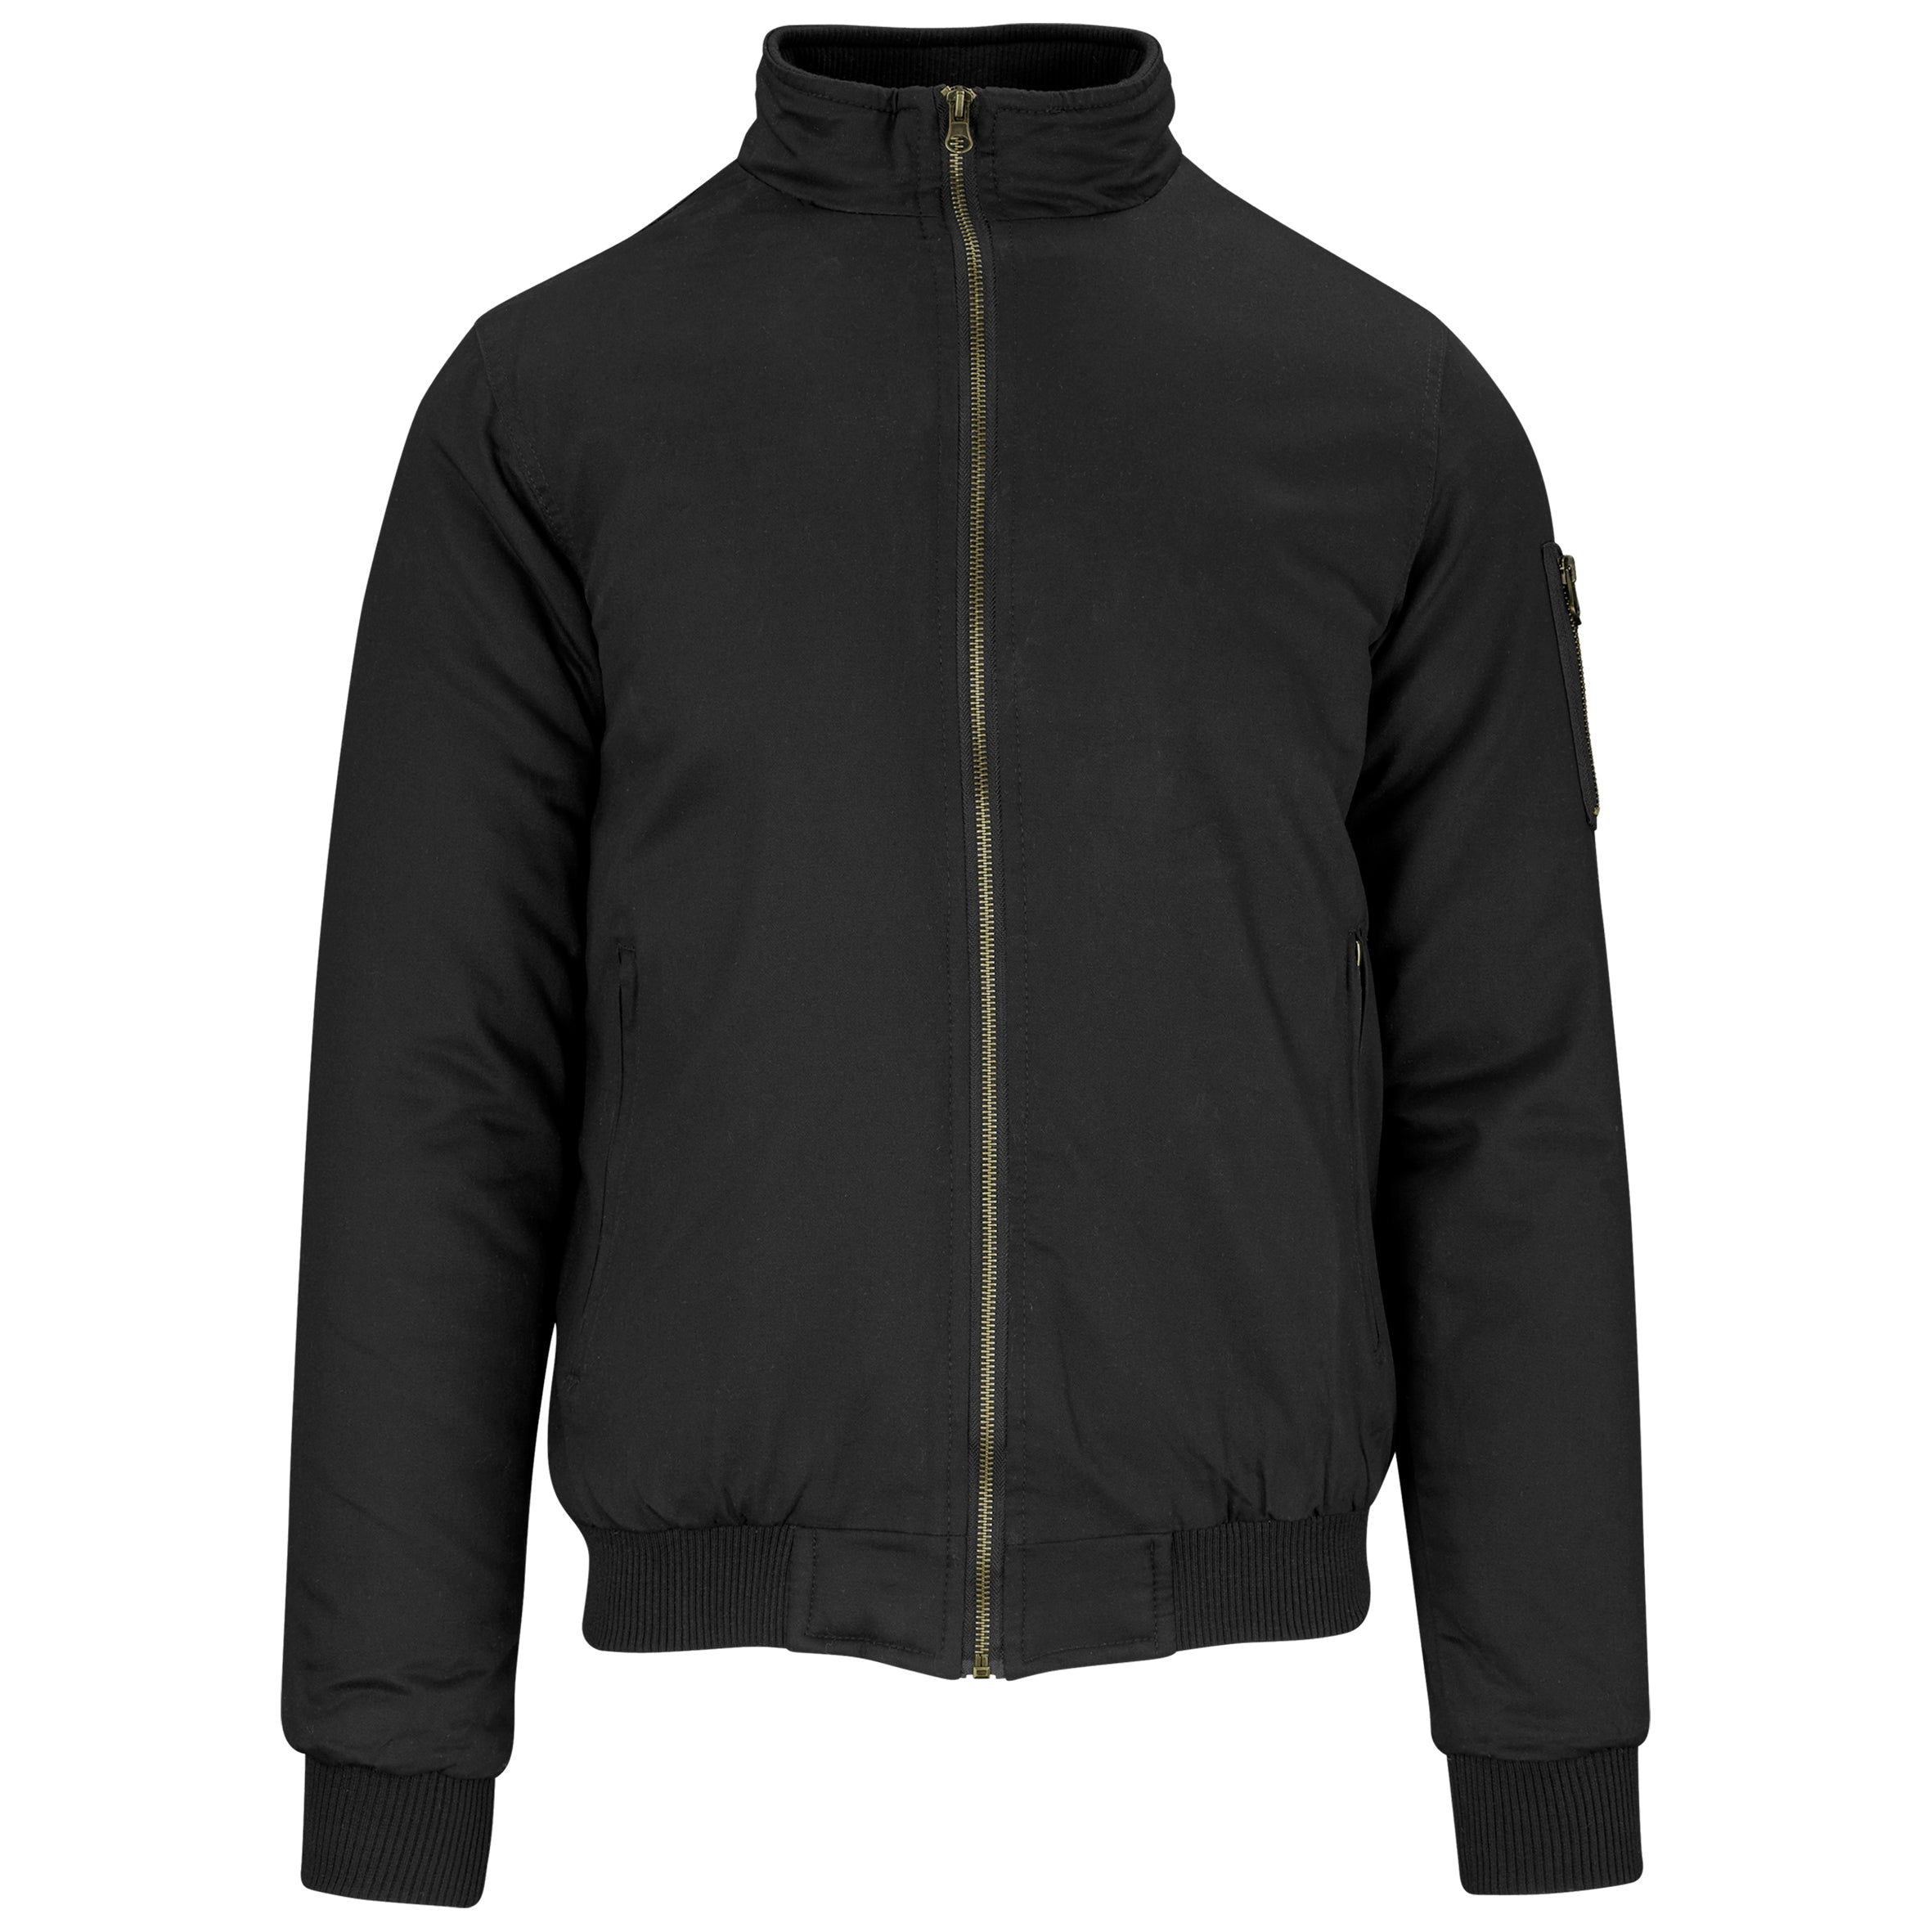 Mens Rover Jacket - Navy Only-Coats & Jackets